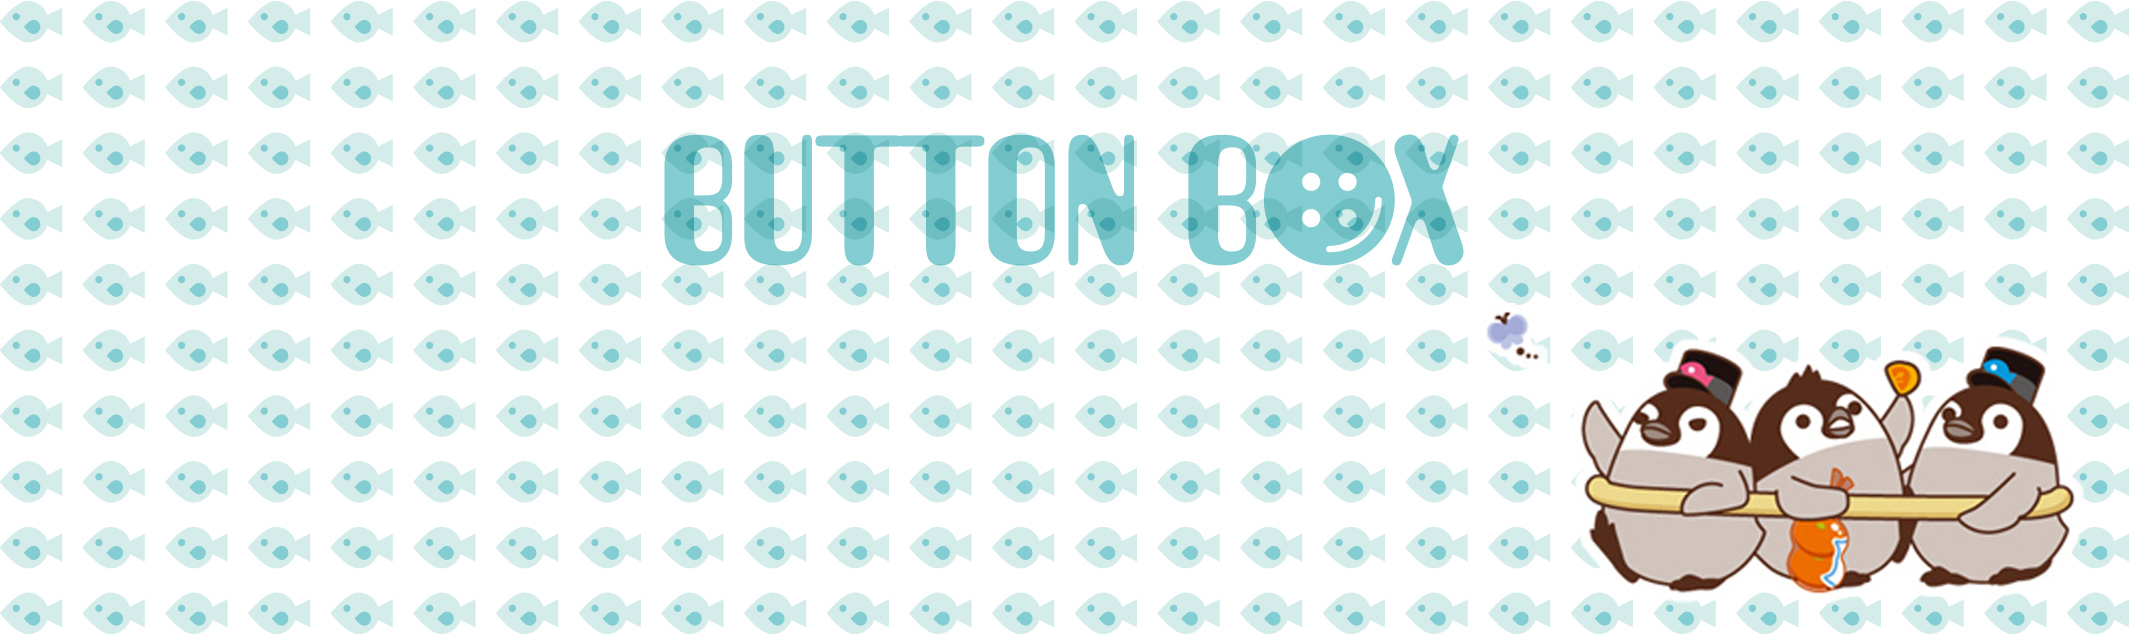 BUTTON BOX